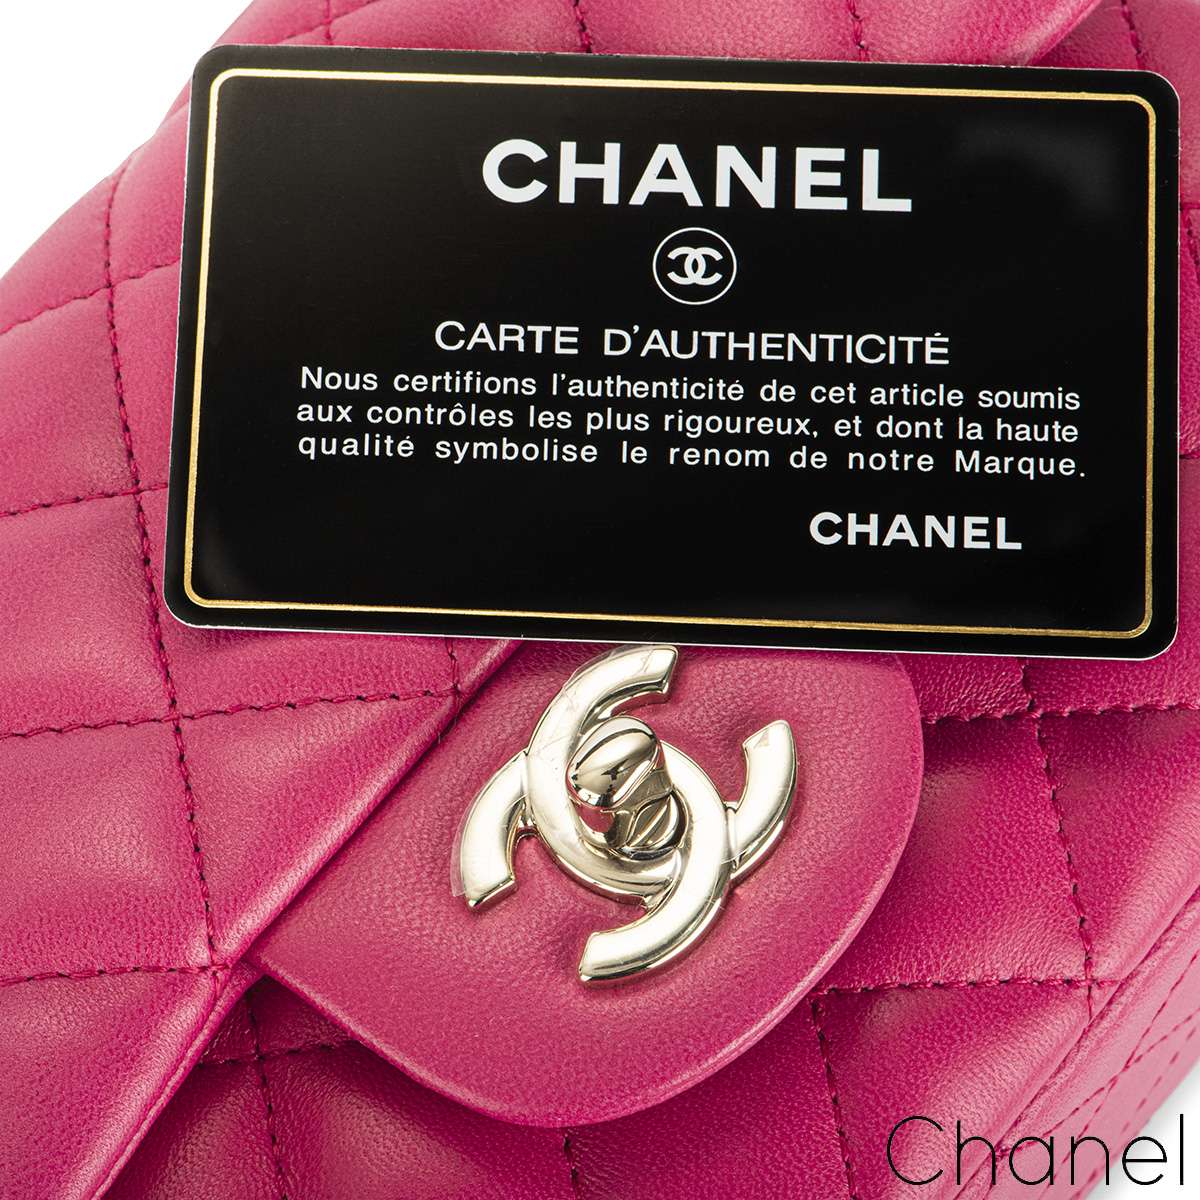 Chanel Fuchsia Pink Lambskin Classic Mini Flap Bag